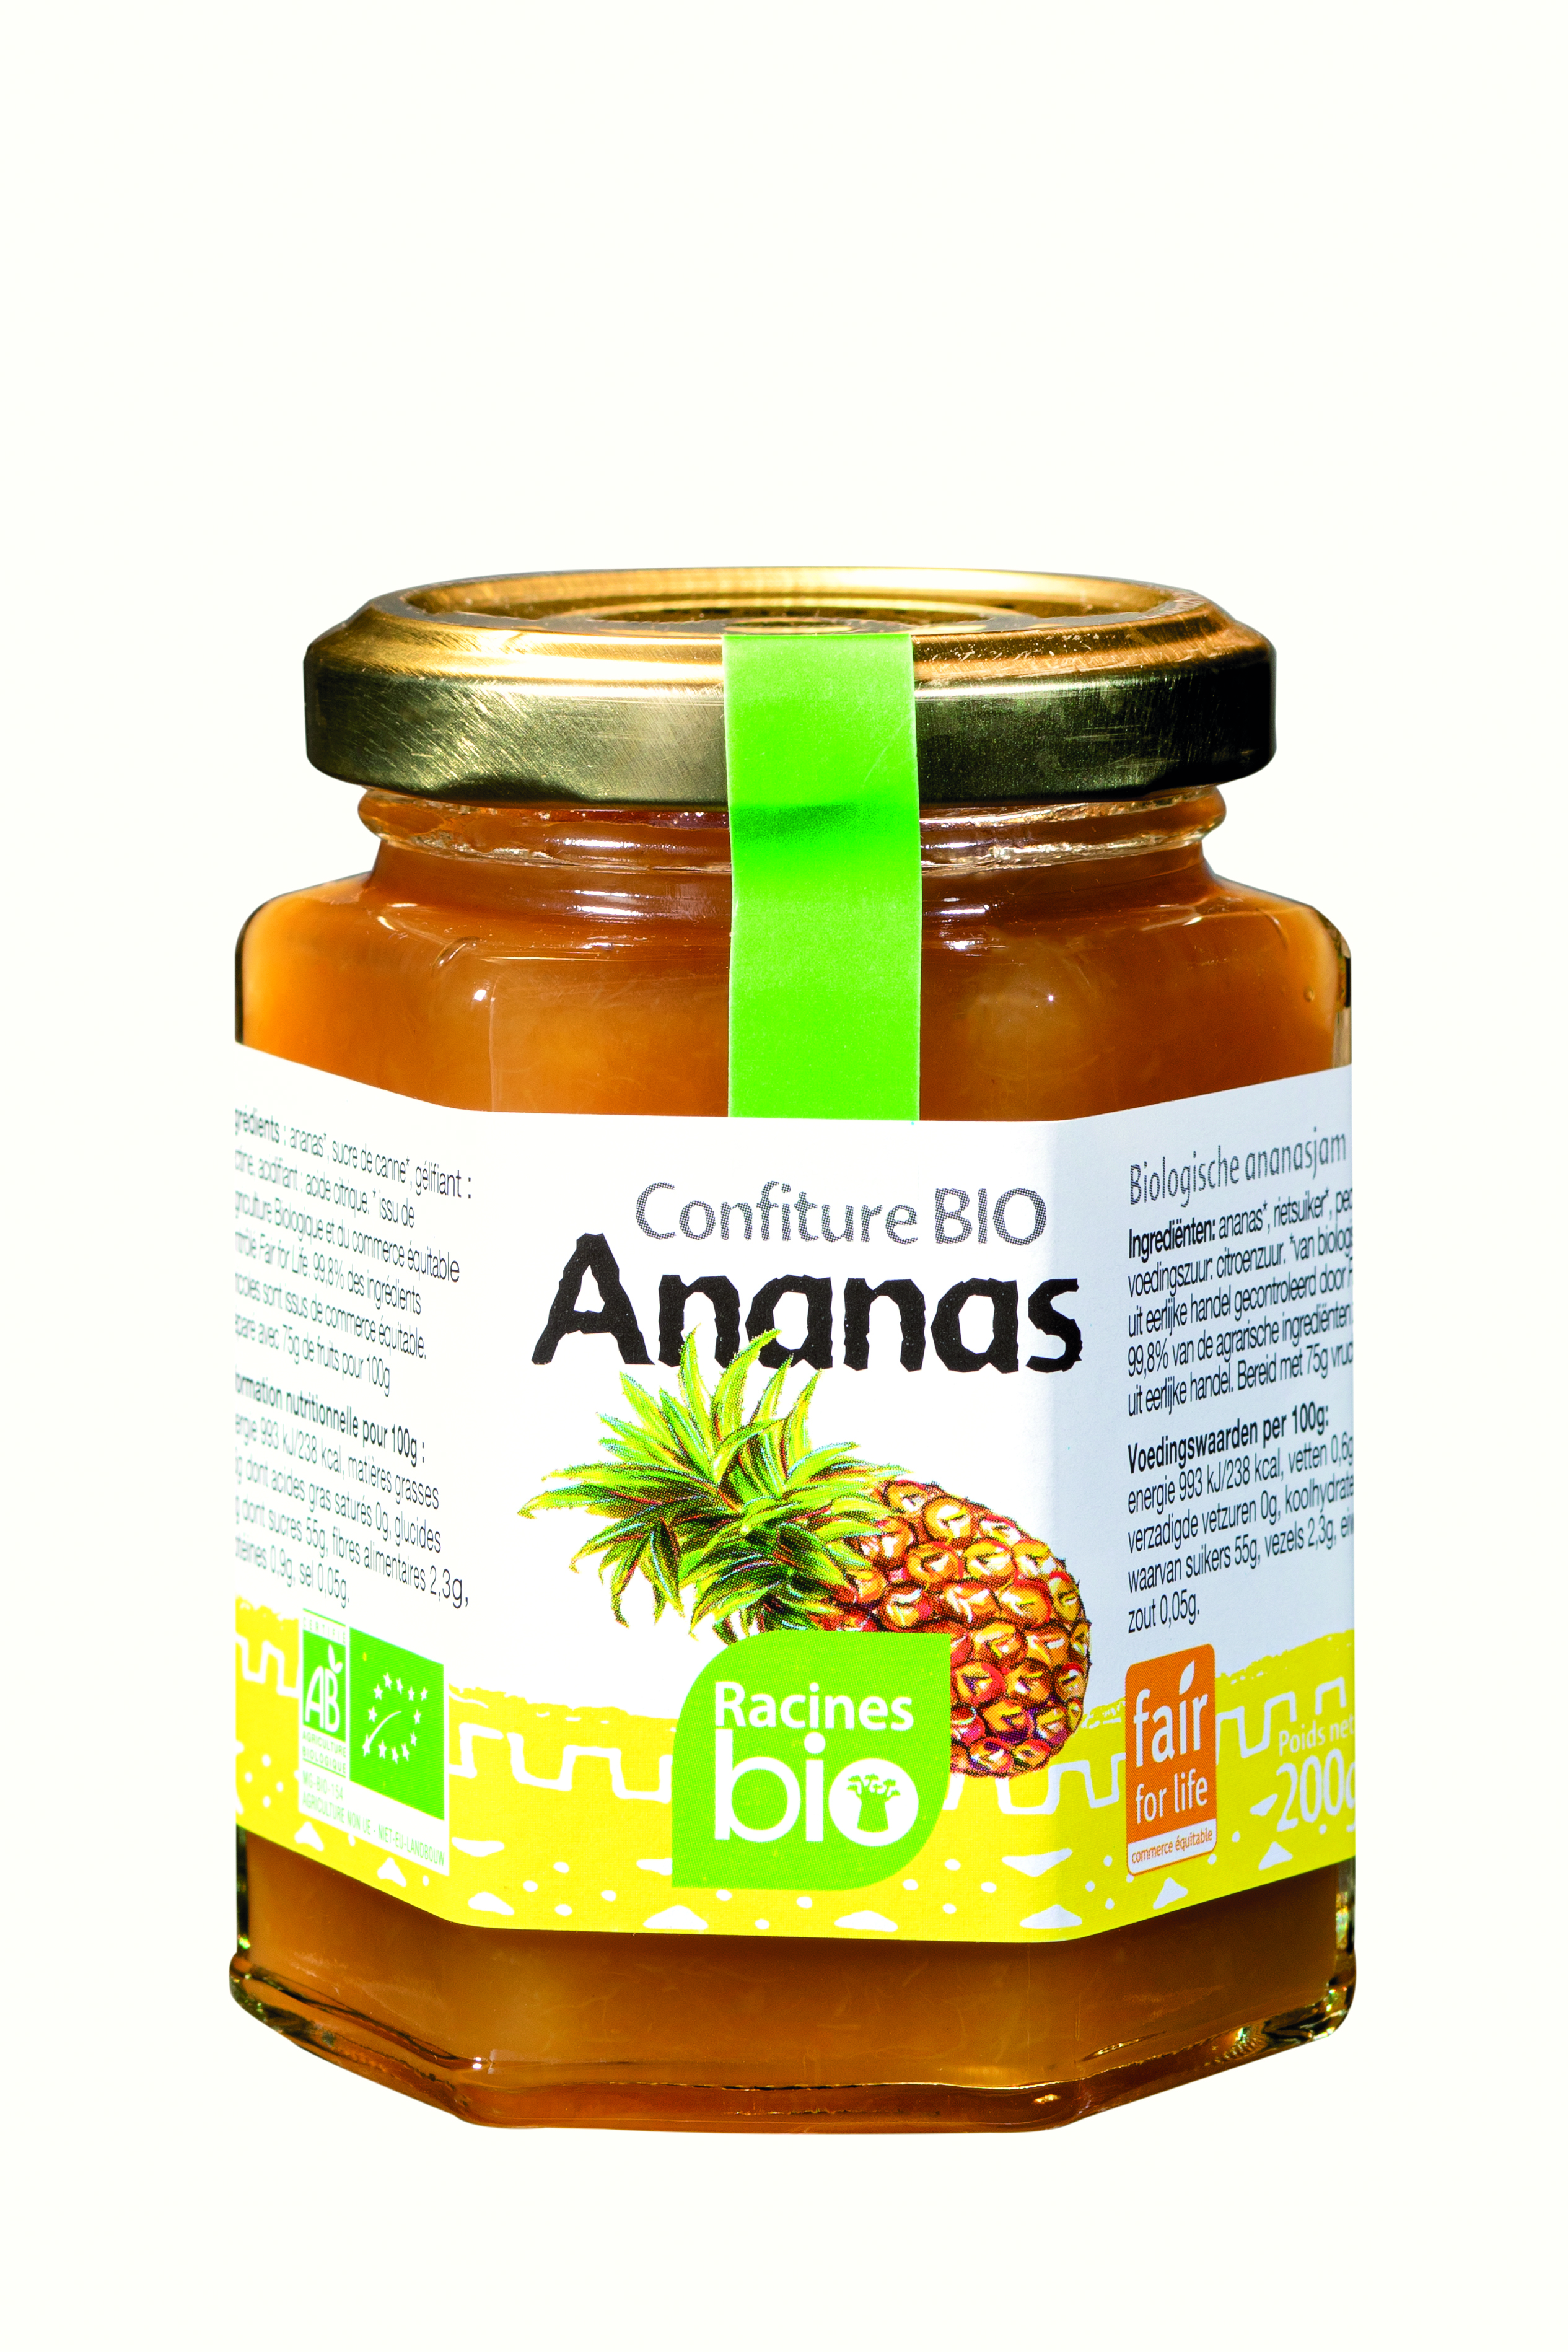 Confettura di Ananas (12 X 200 G) - Racines Bio